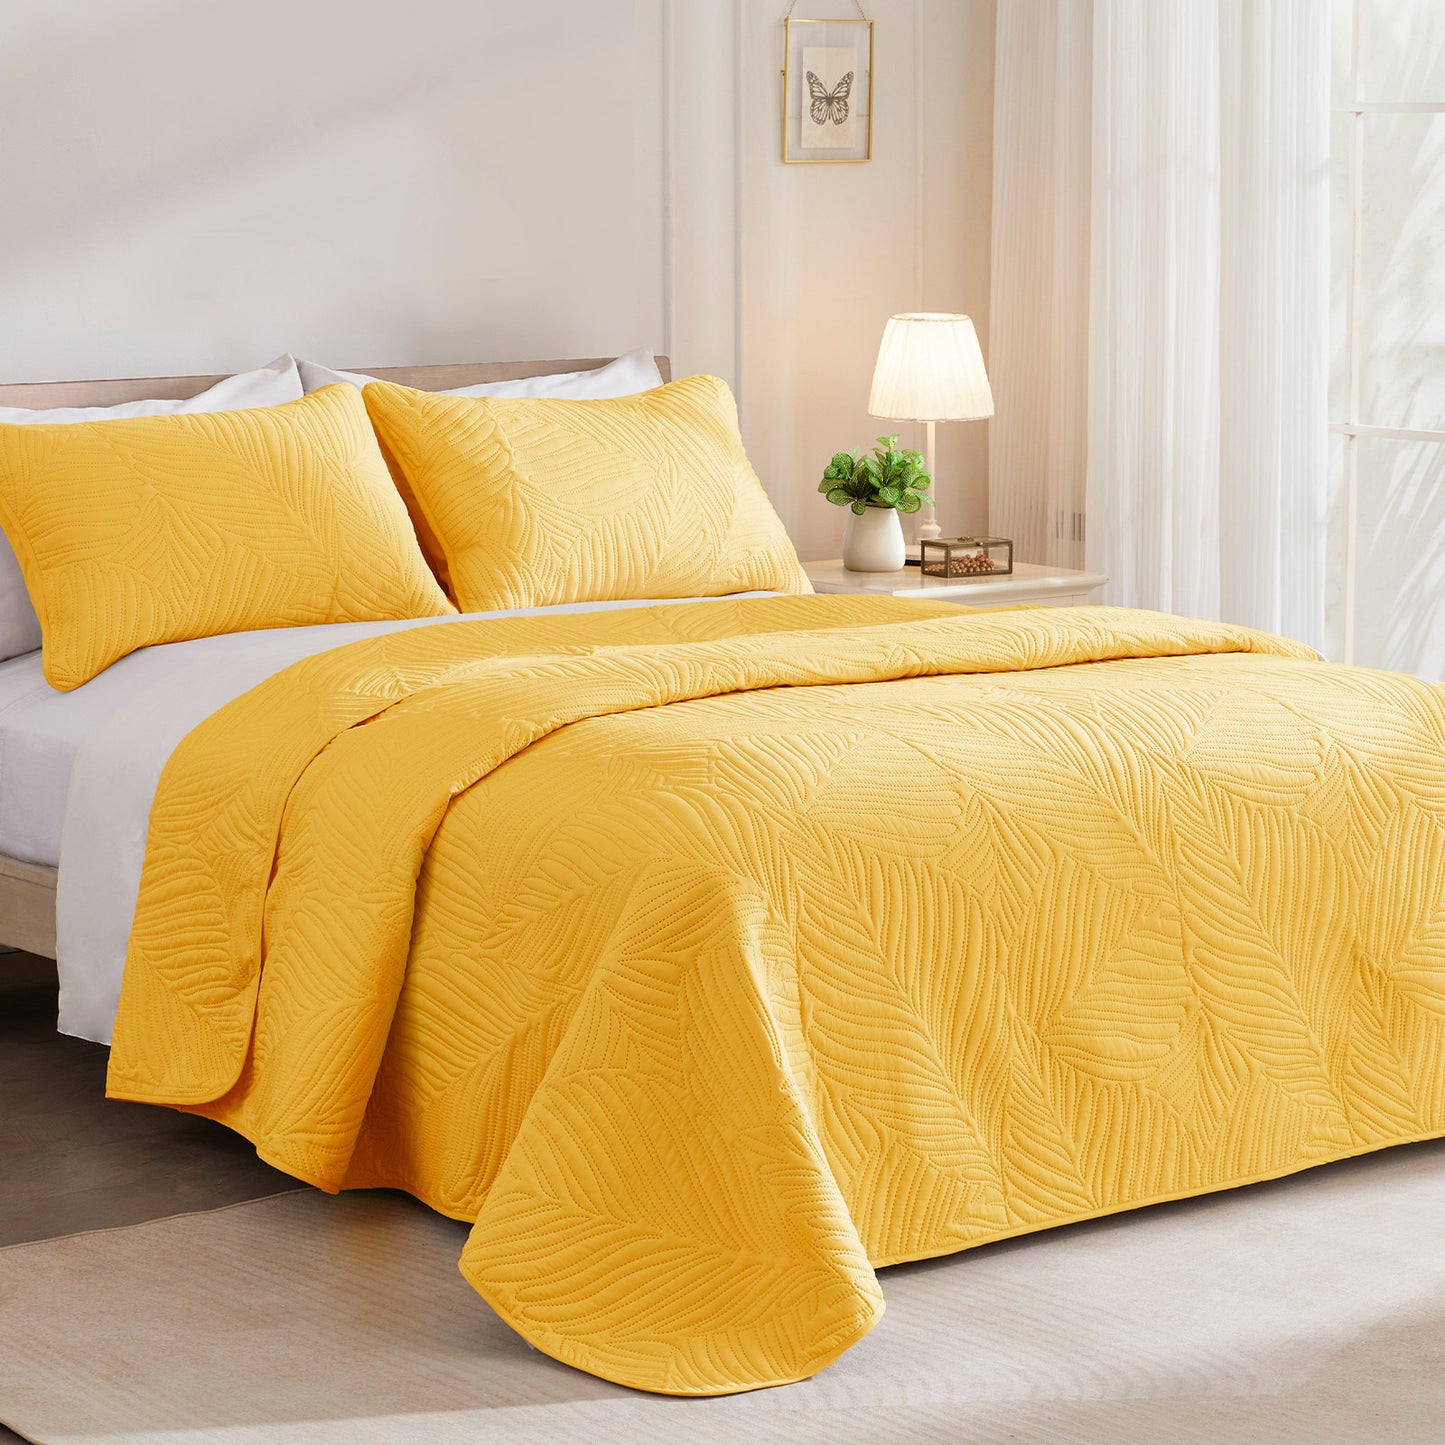 Exclusivo Mezcla Full Queen Quilt Set Yellow, Lightweight Bedspread Leaf Pattern Bed Cover Soft Coverlet Bedding Set(1 Quilt, 2 Pillow Shams)